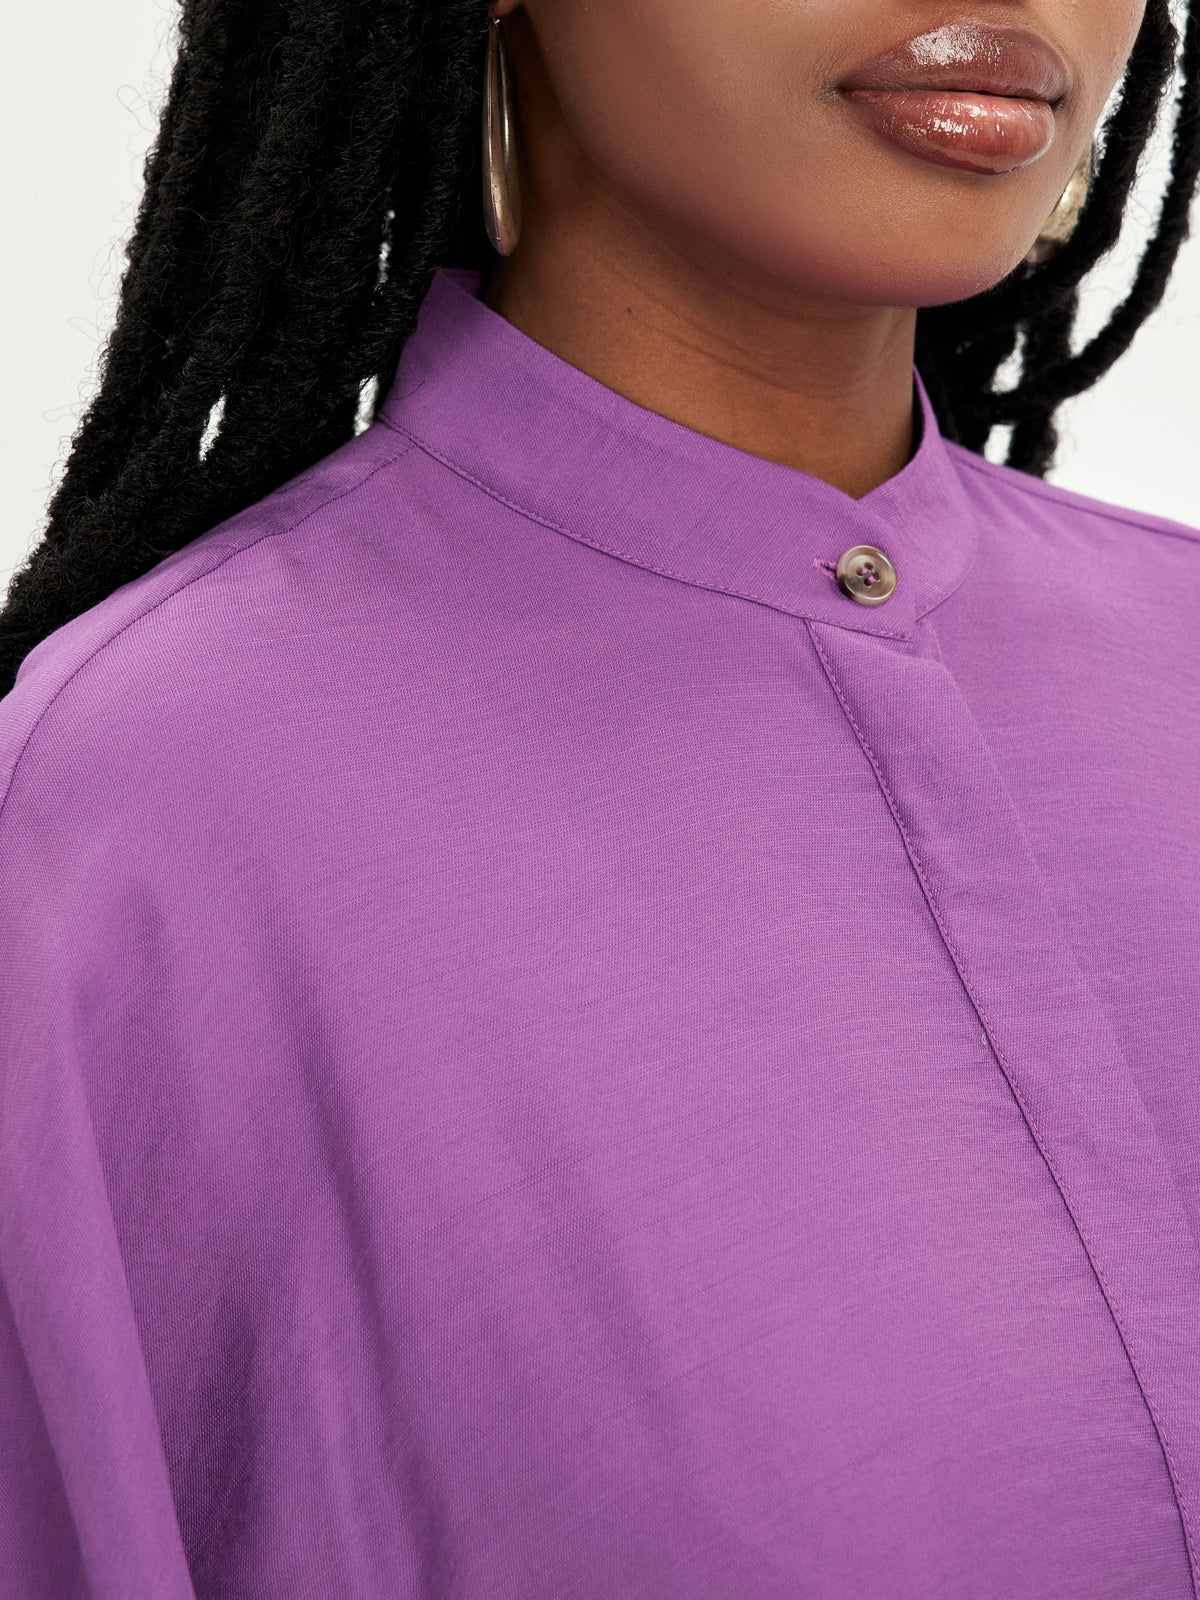 Mat Button Down Shirt in Purple